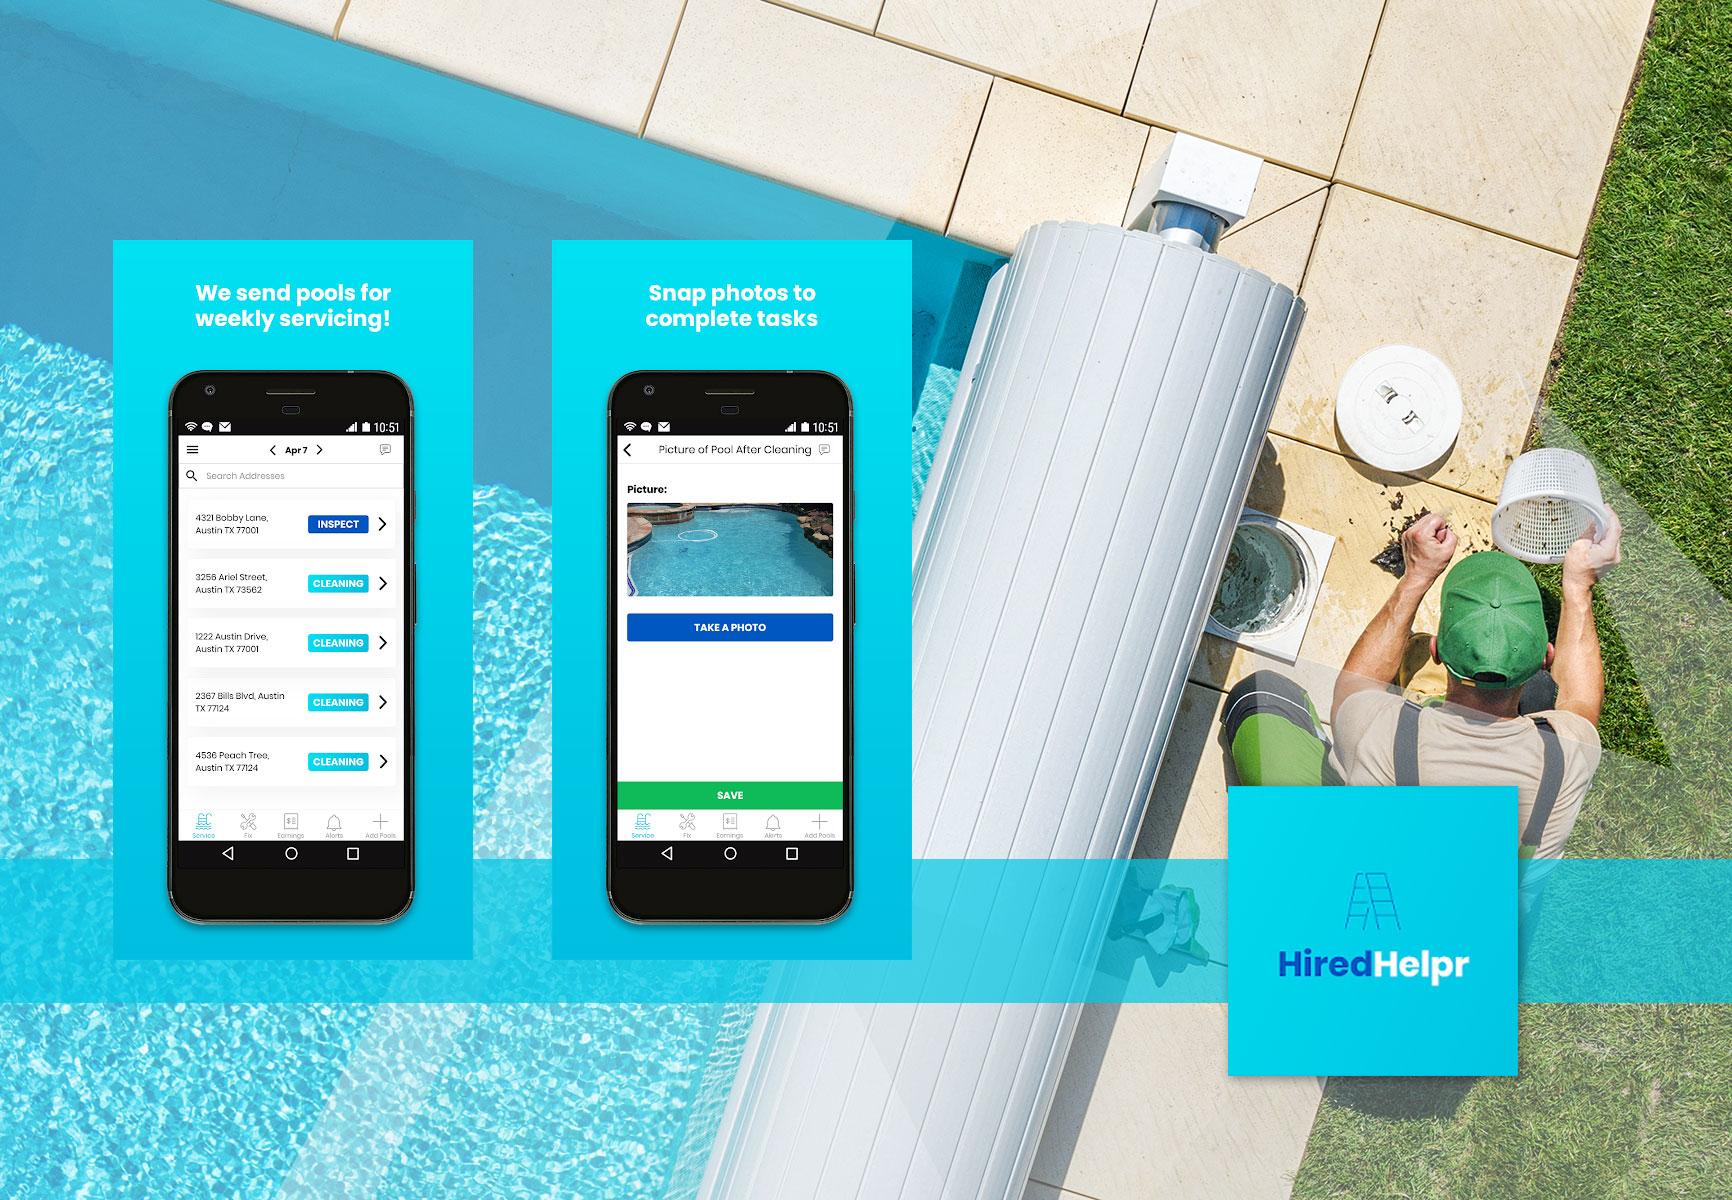 We send pools for weekly servicing! - HiredHelpr - Mobile mockups for Hiredhelpr app.